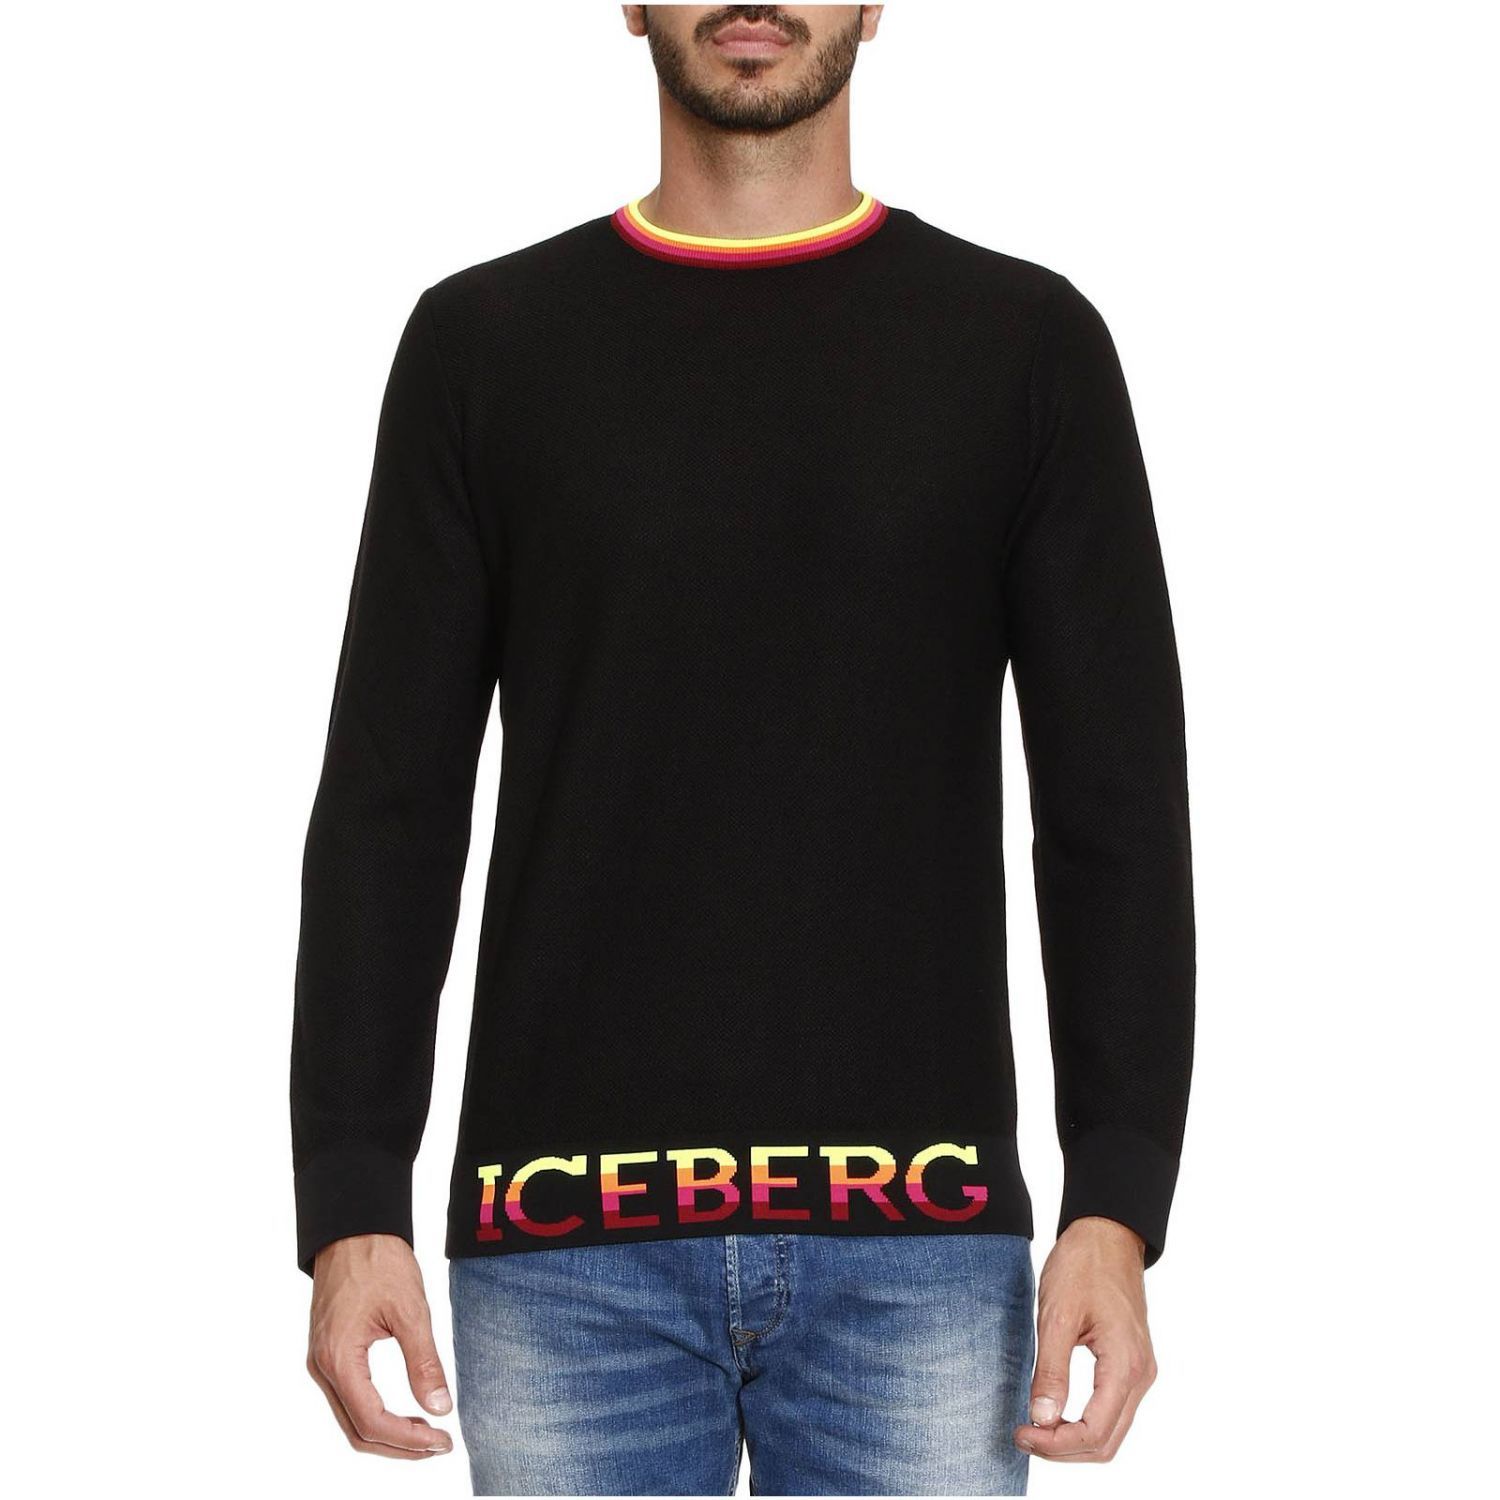 iceberg sweater ravelry